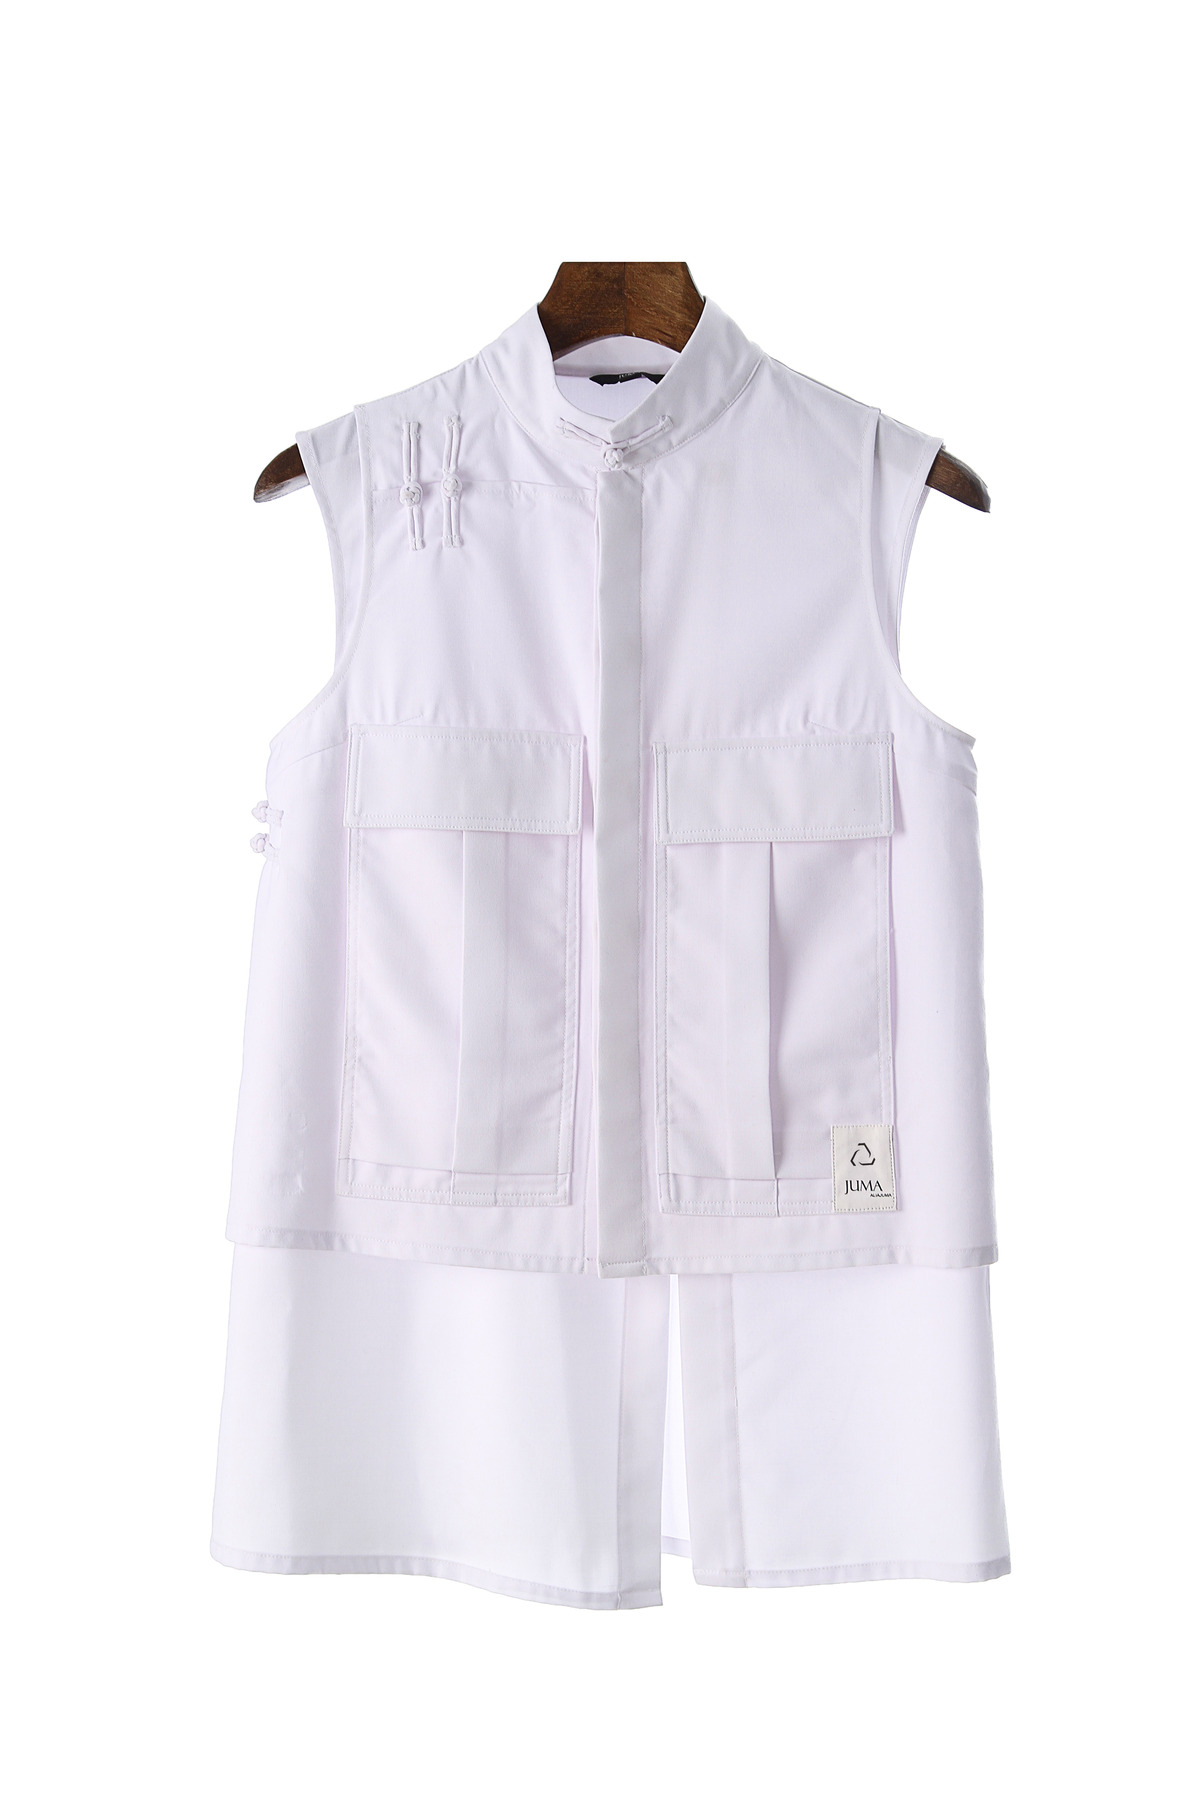 JUMA 旗袍式背心-6个再生水瓶-白色｜JUMA Qipao Style Vest - 6 Recycled Water Bottles - White